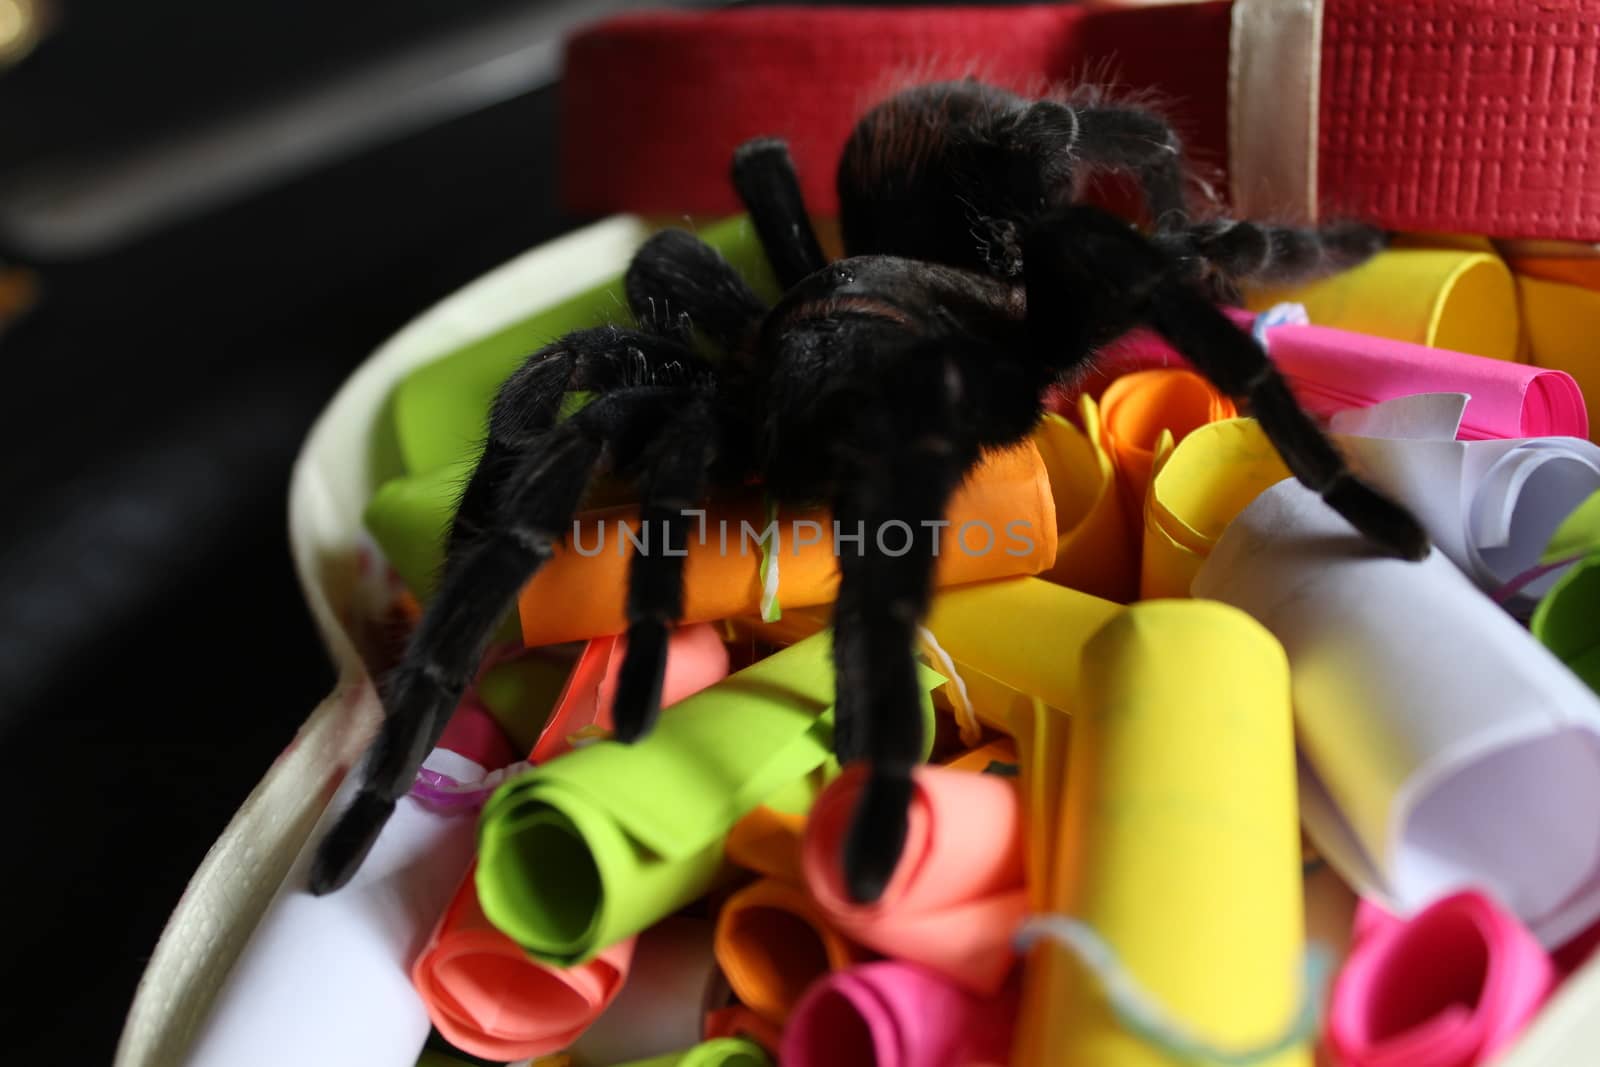 Tarantula in a gift box by SmirMaxStock